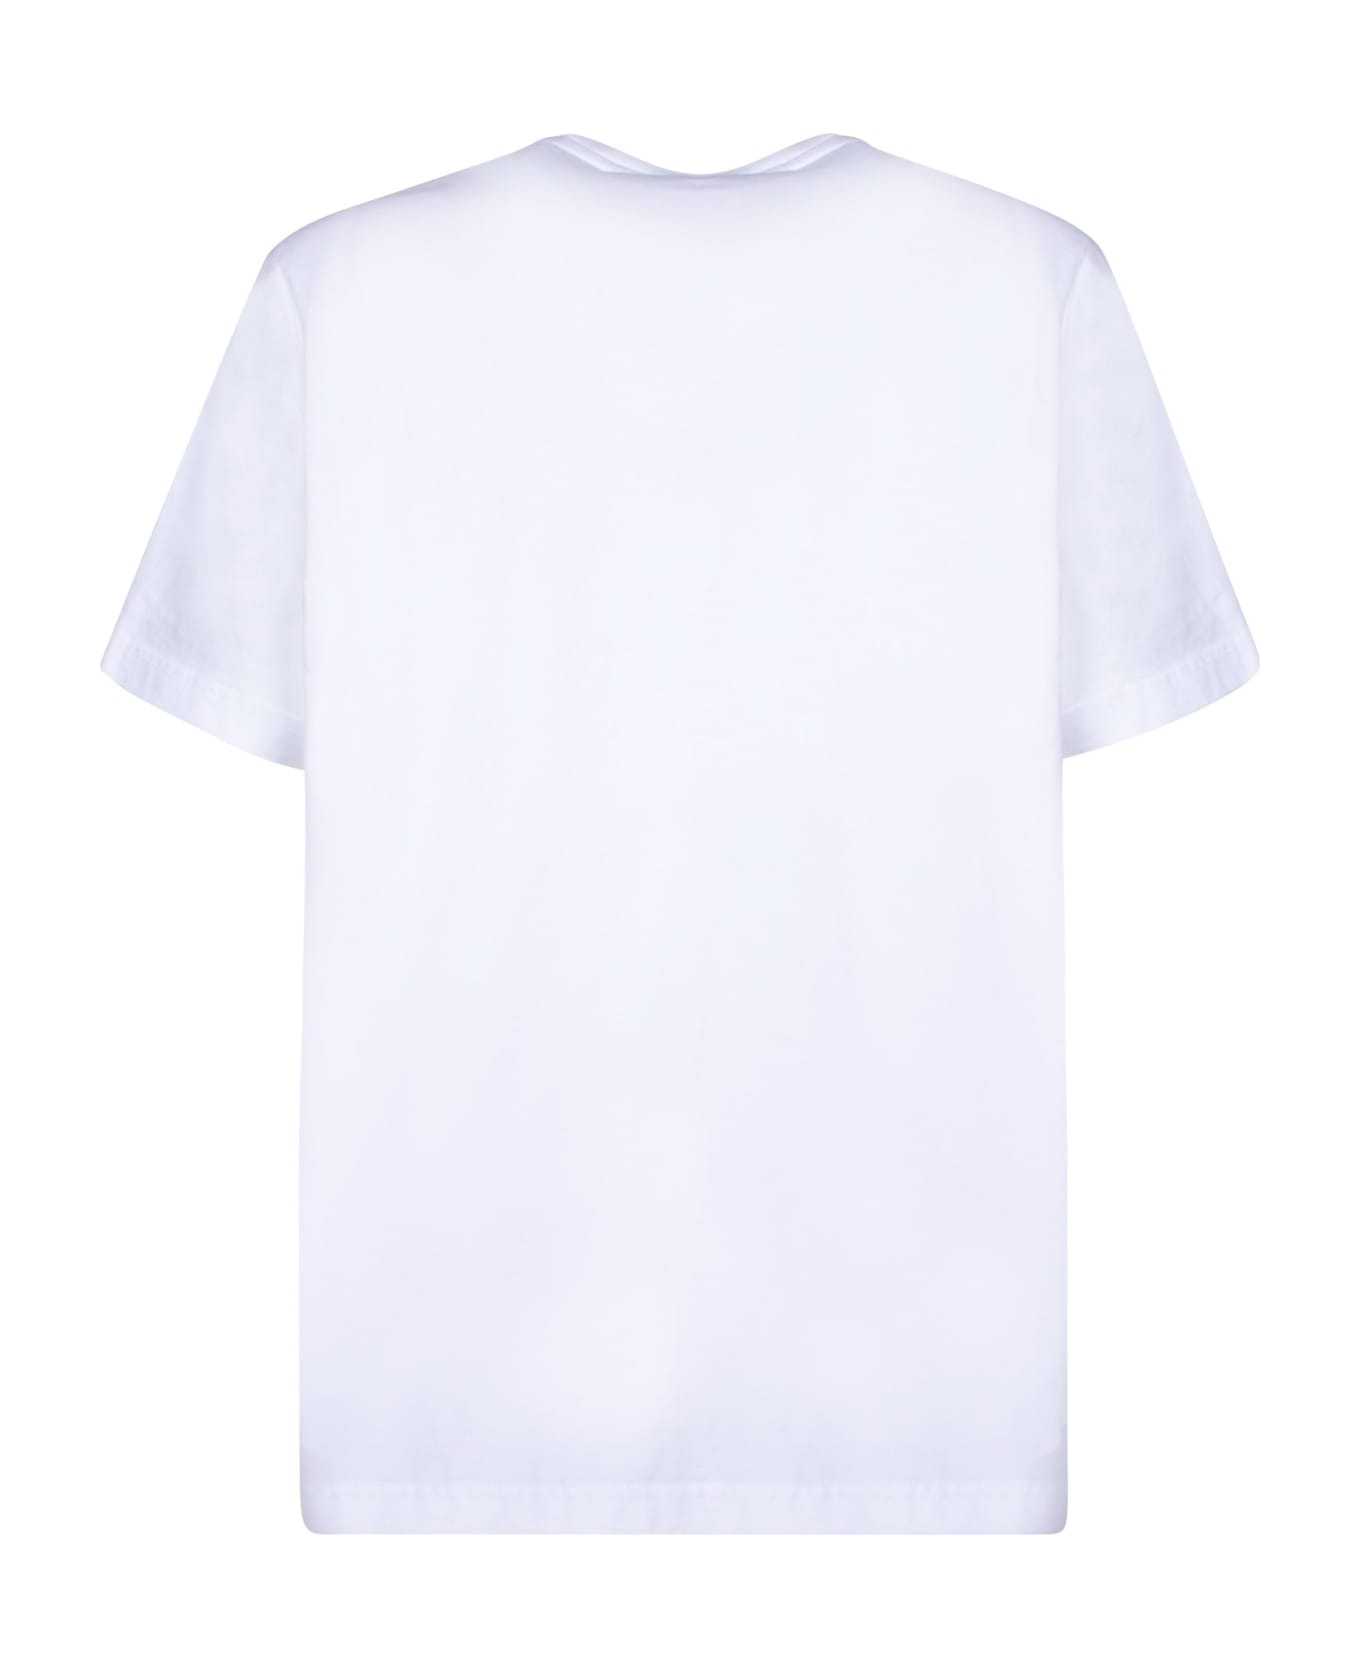 Maison Kitsuné Speedy Fox White T-shirt - White